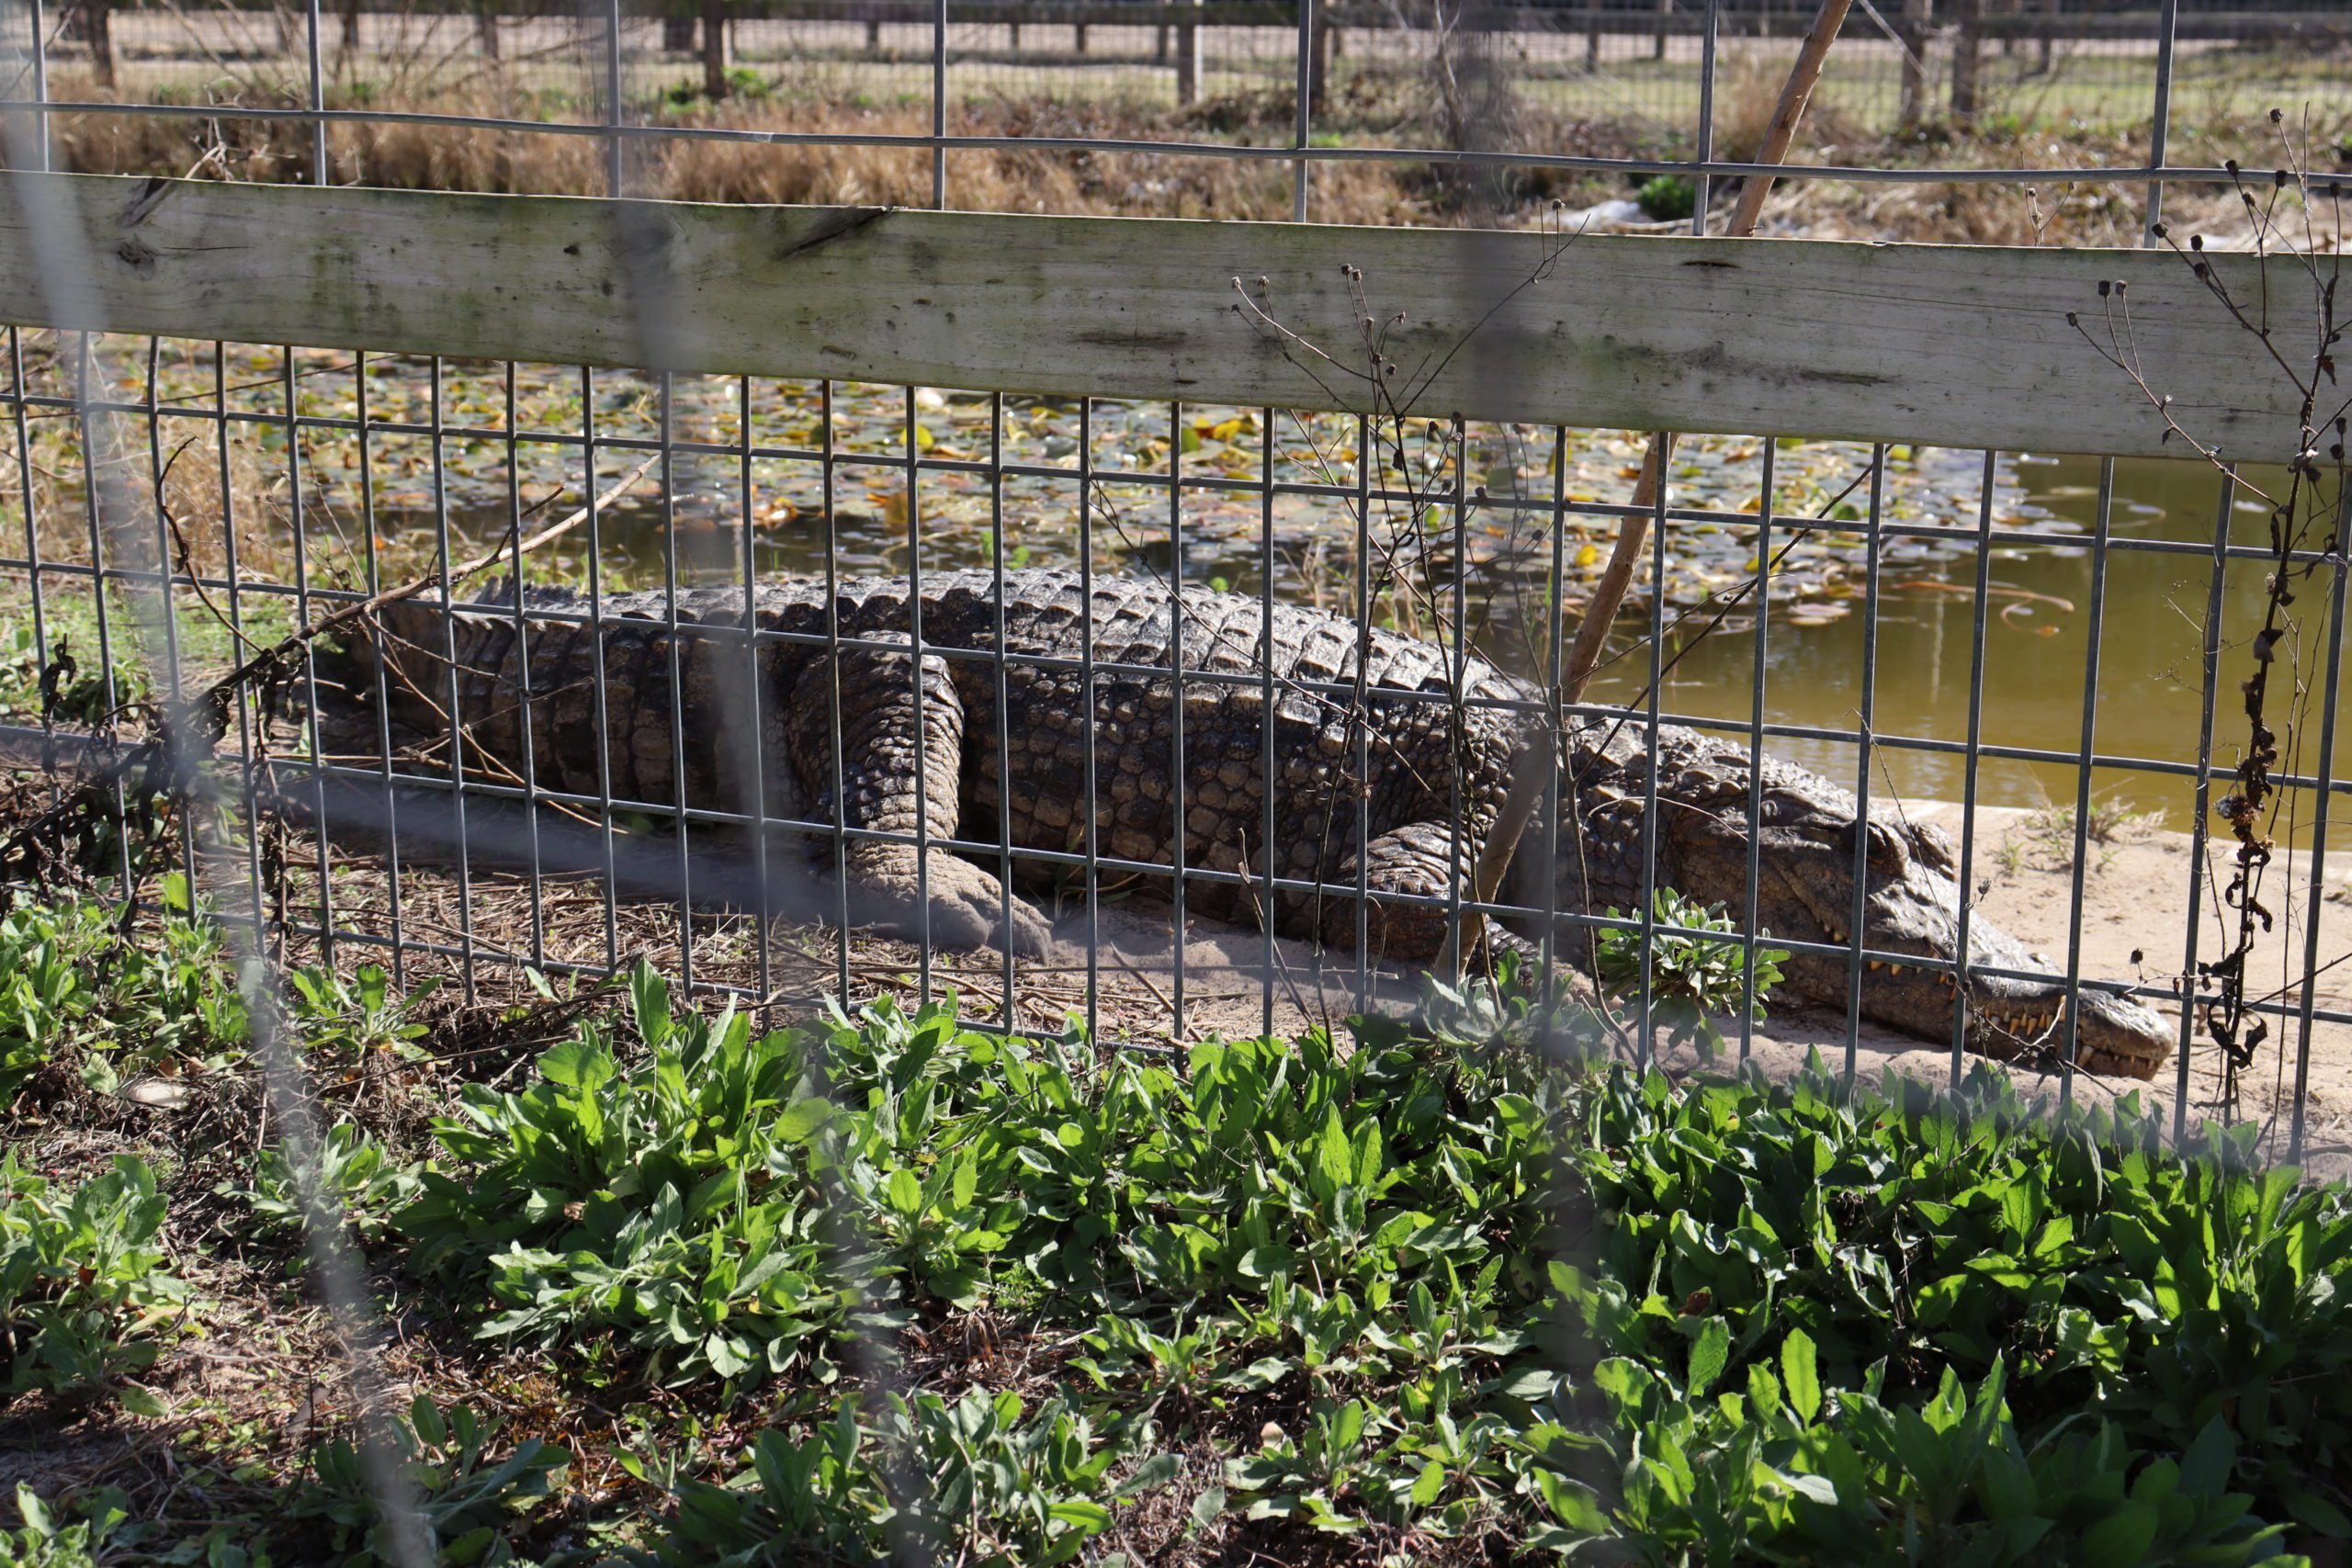 Facility to bring more reptiles to Emerald Coast Zoo